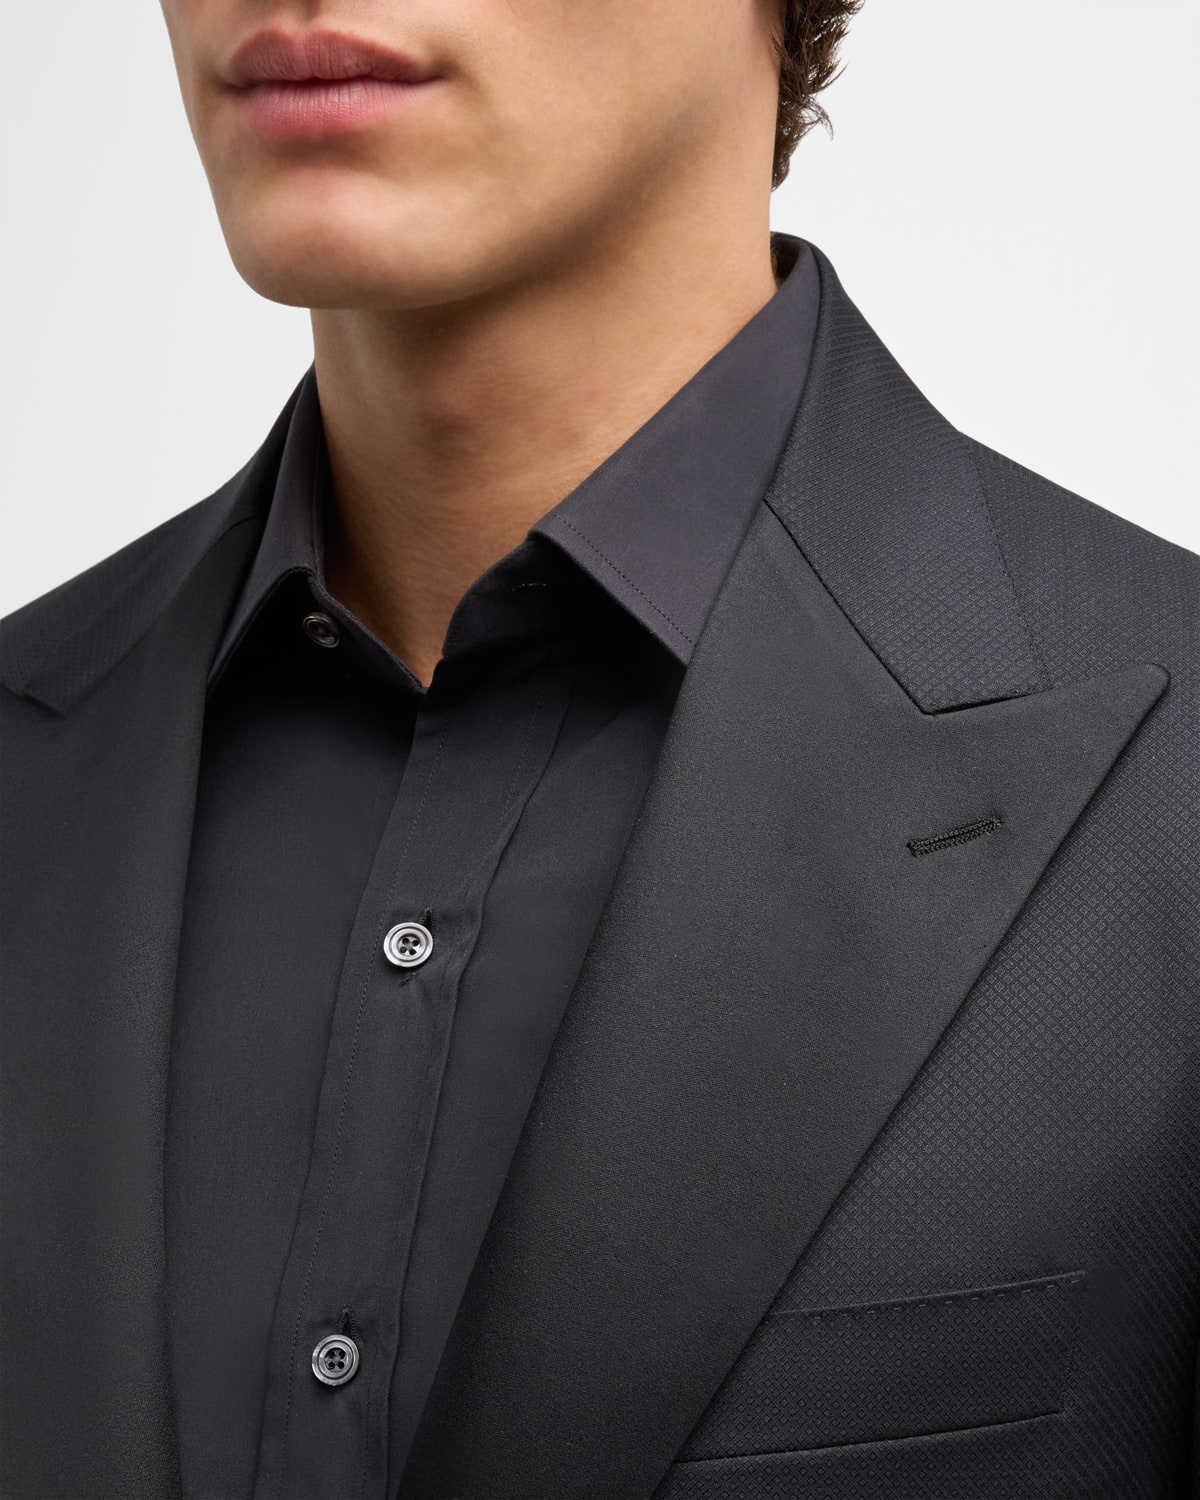 Men's Wool Diamond Weave Tuxedo - 2